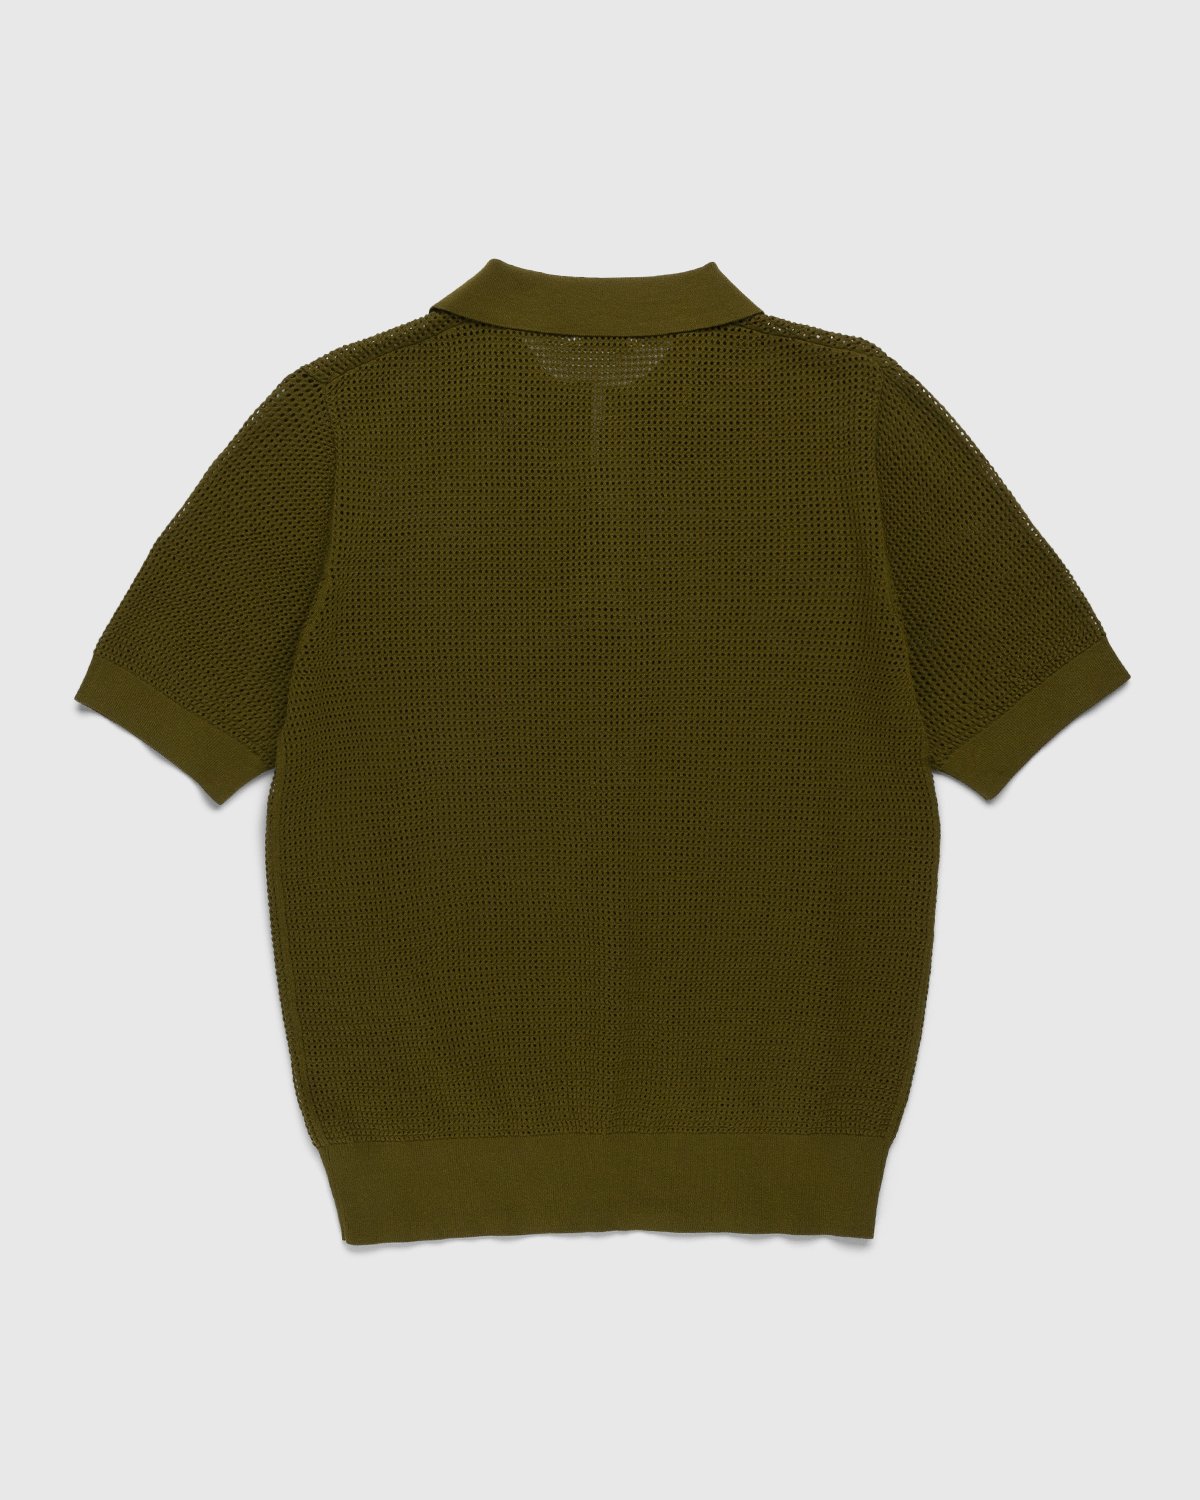 Dries van Noten - Jael Polo Shirt Olive - Clothing - Green - Image 2